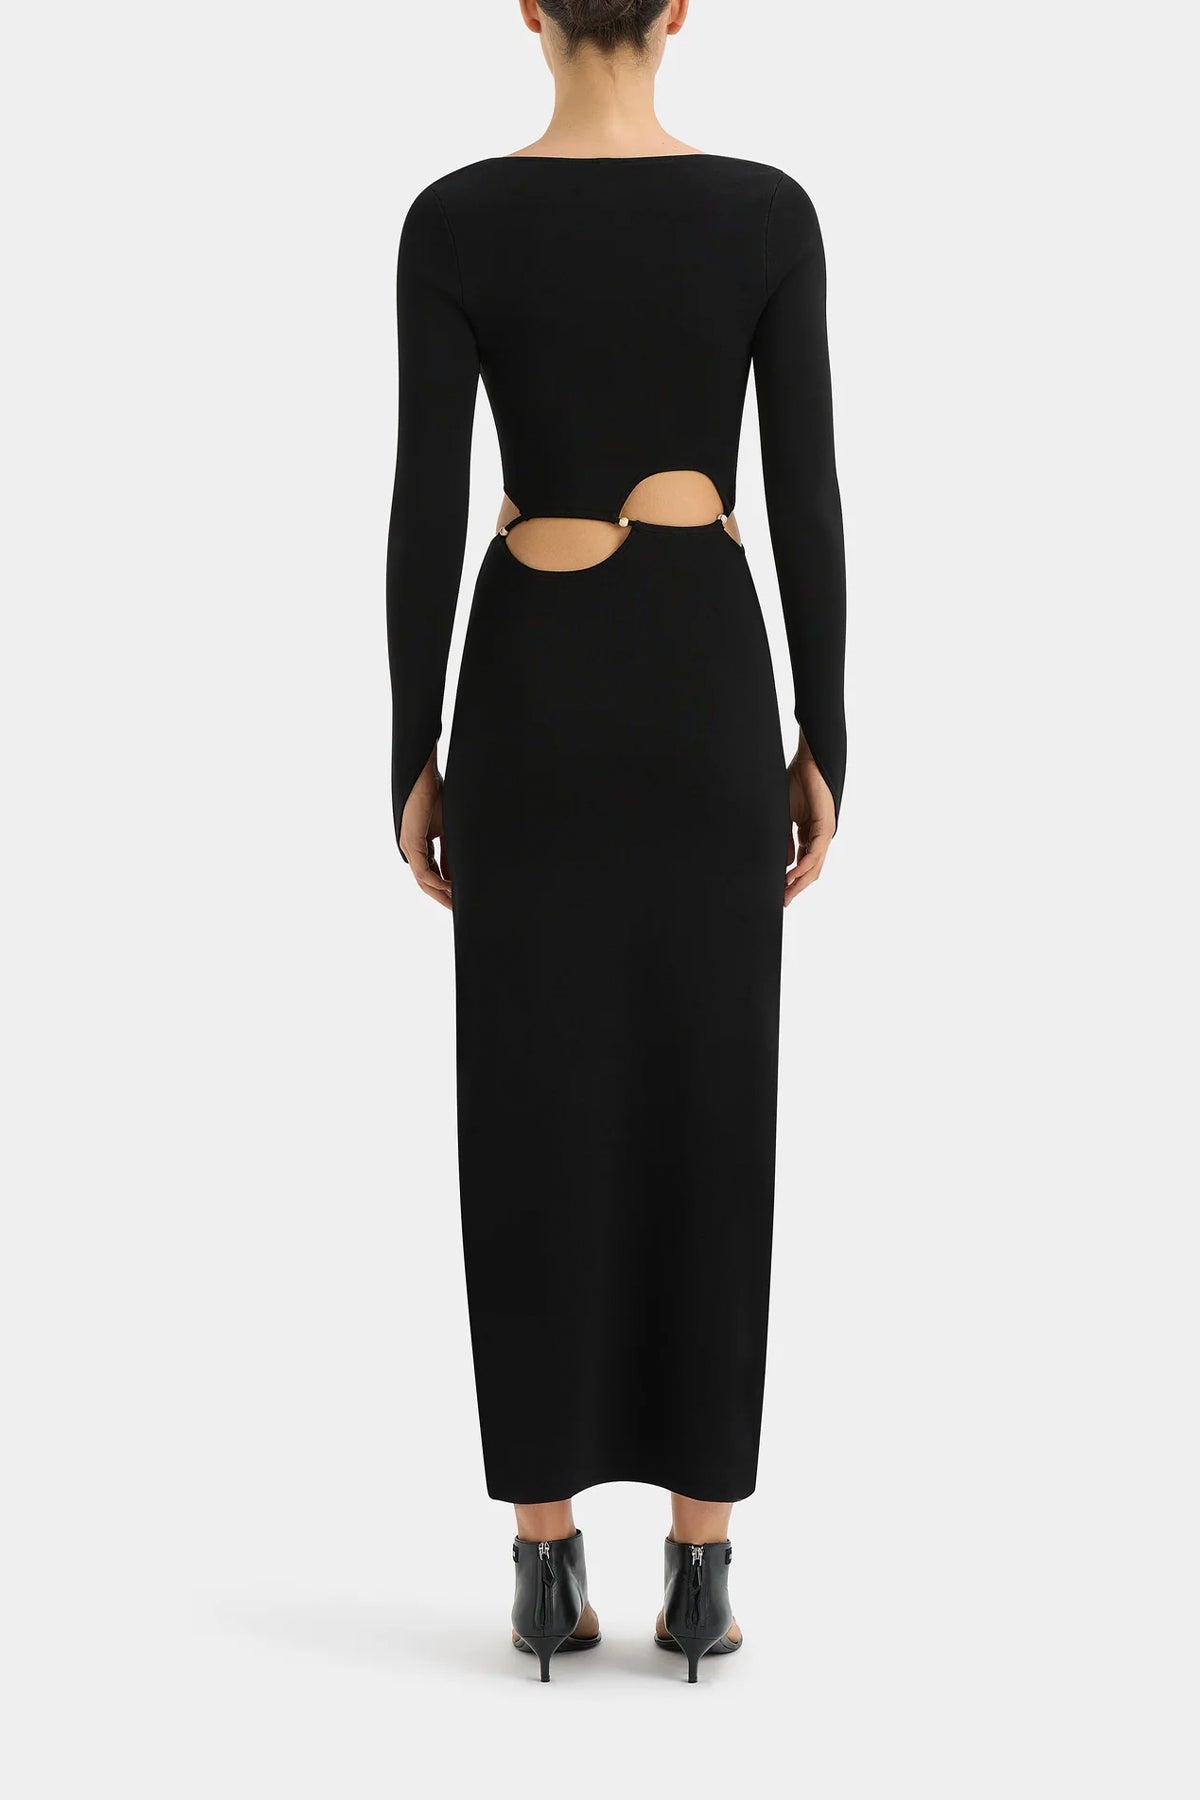 Salvador Beaded Long Sleeve Dress in Black - shop-olivia.com